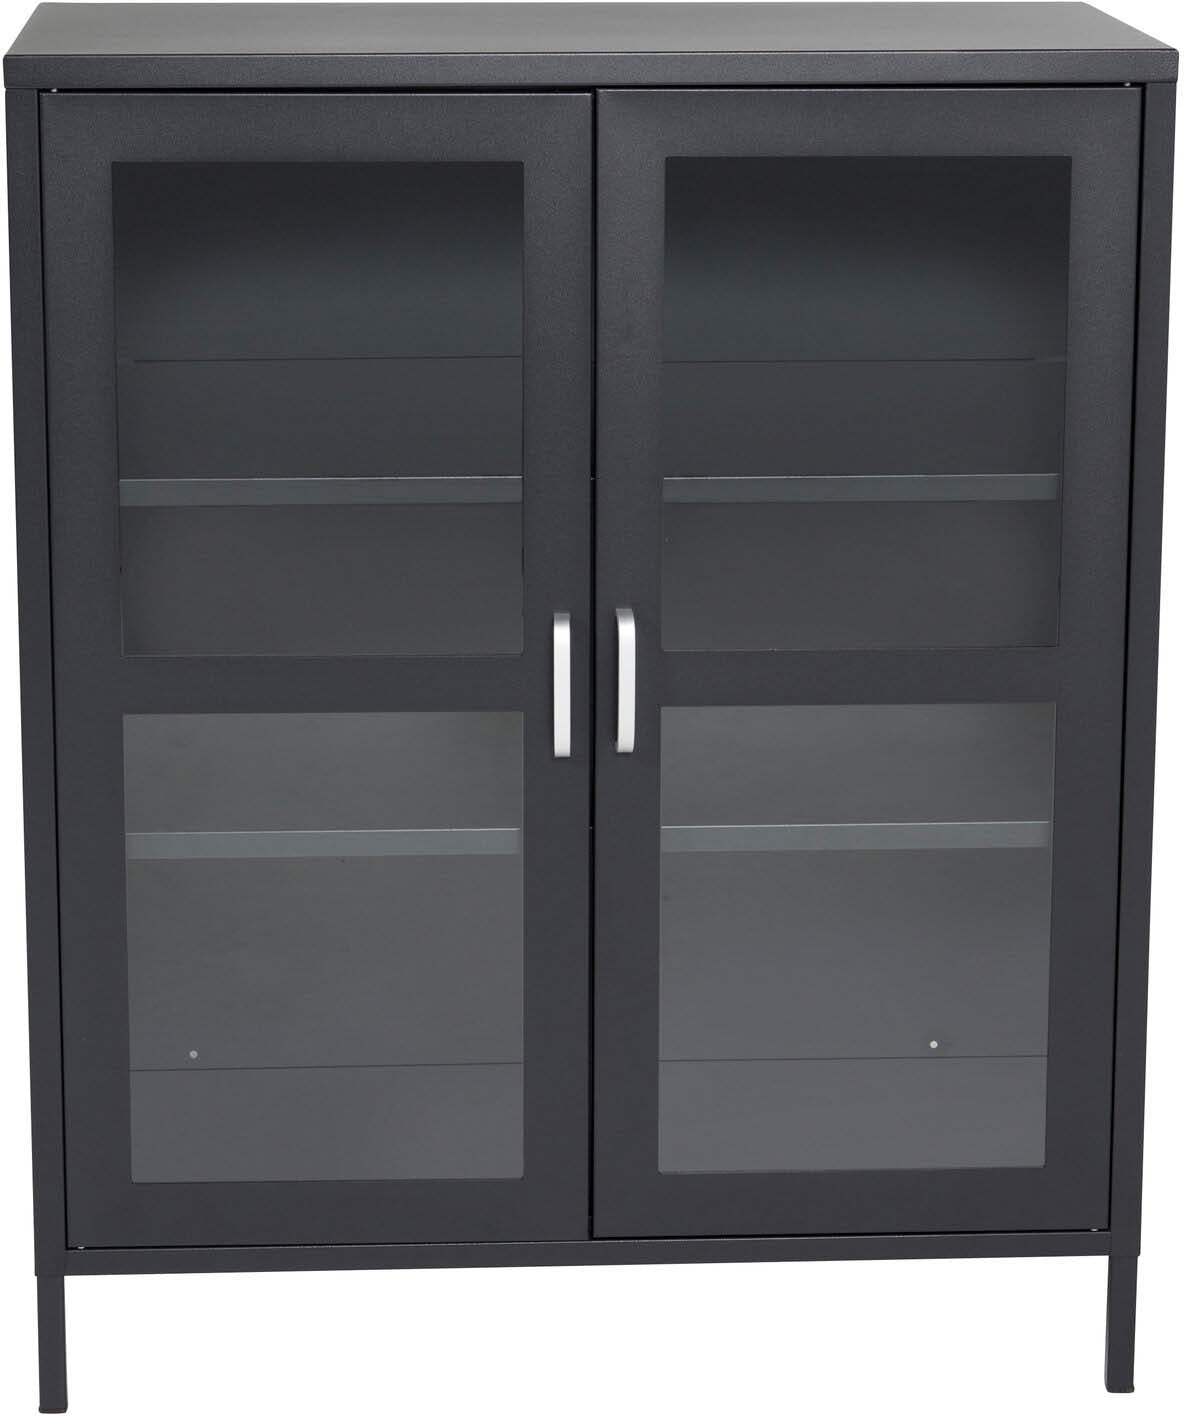 Acero Cabinet - KAQTU Design